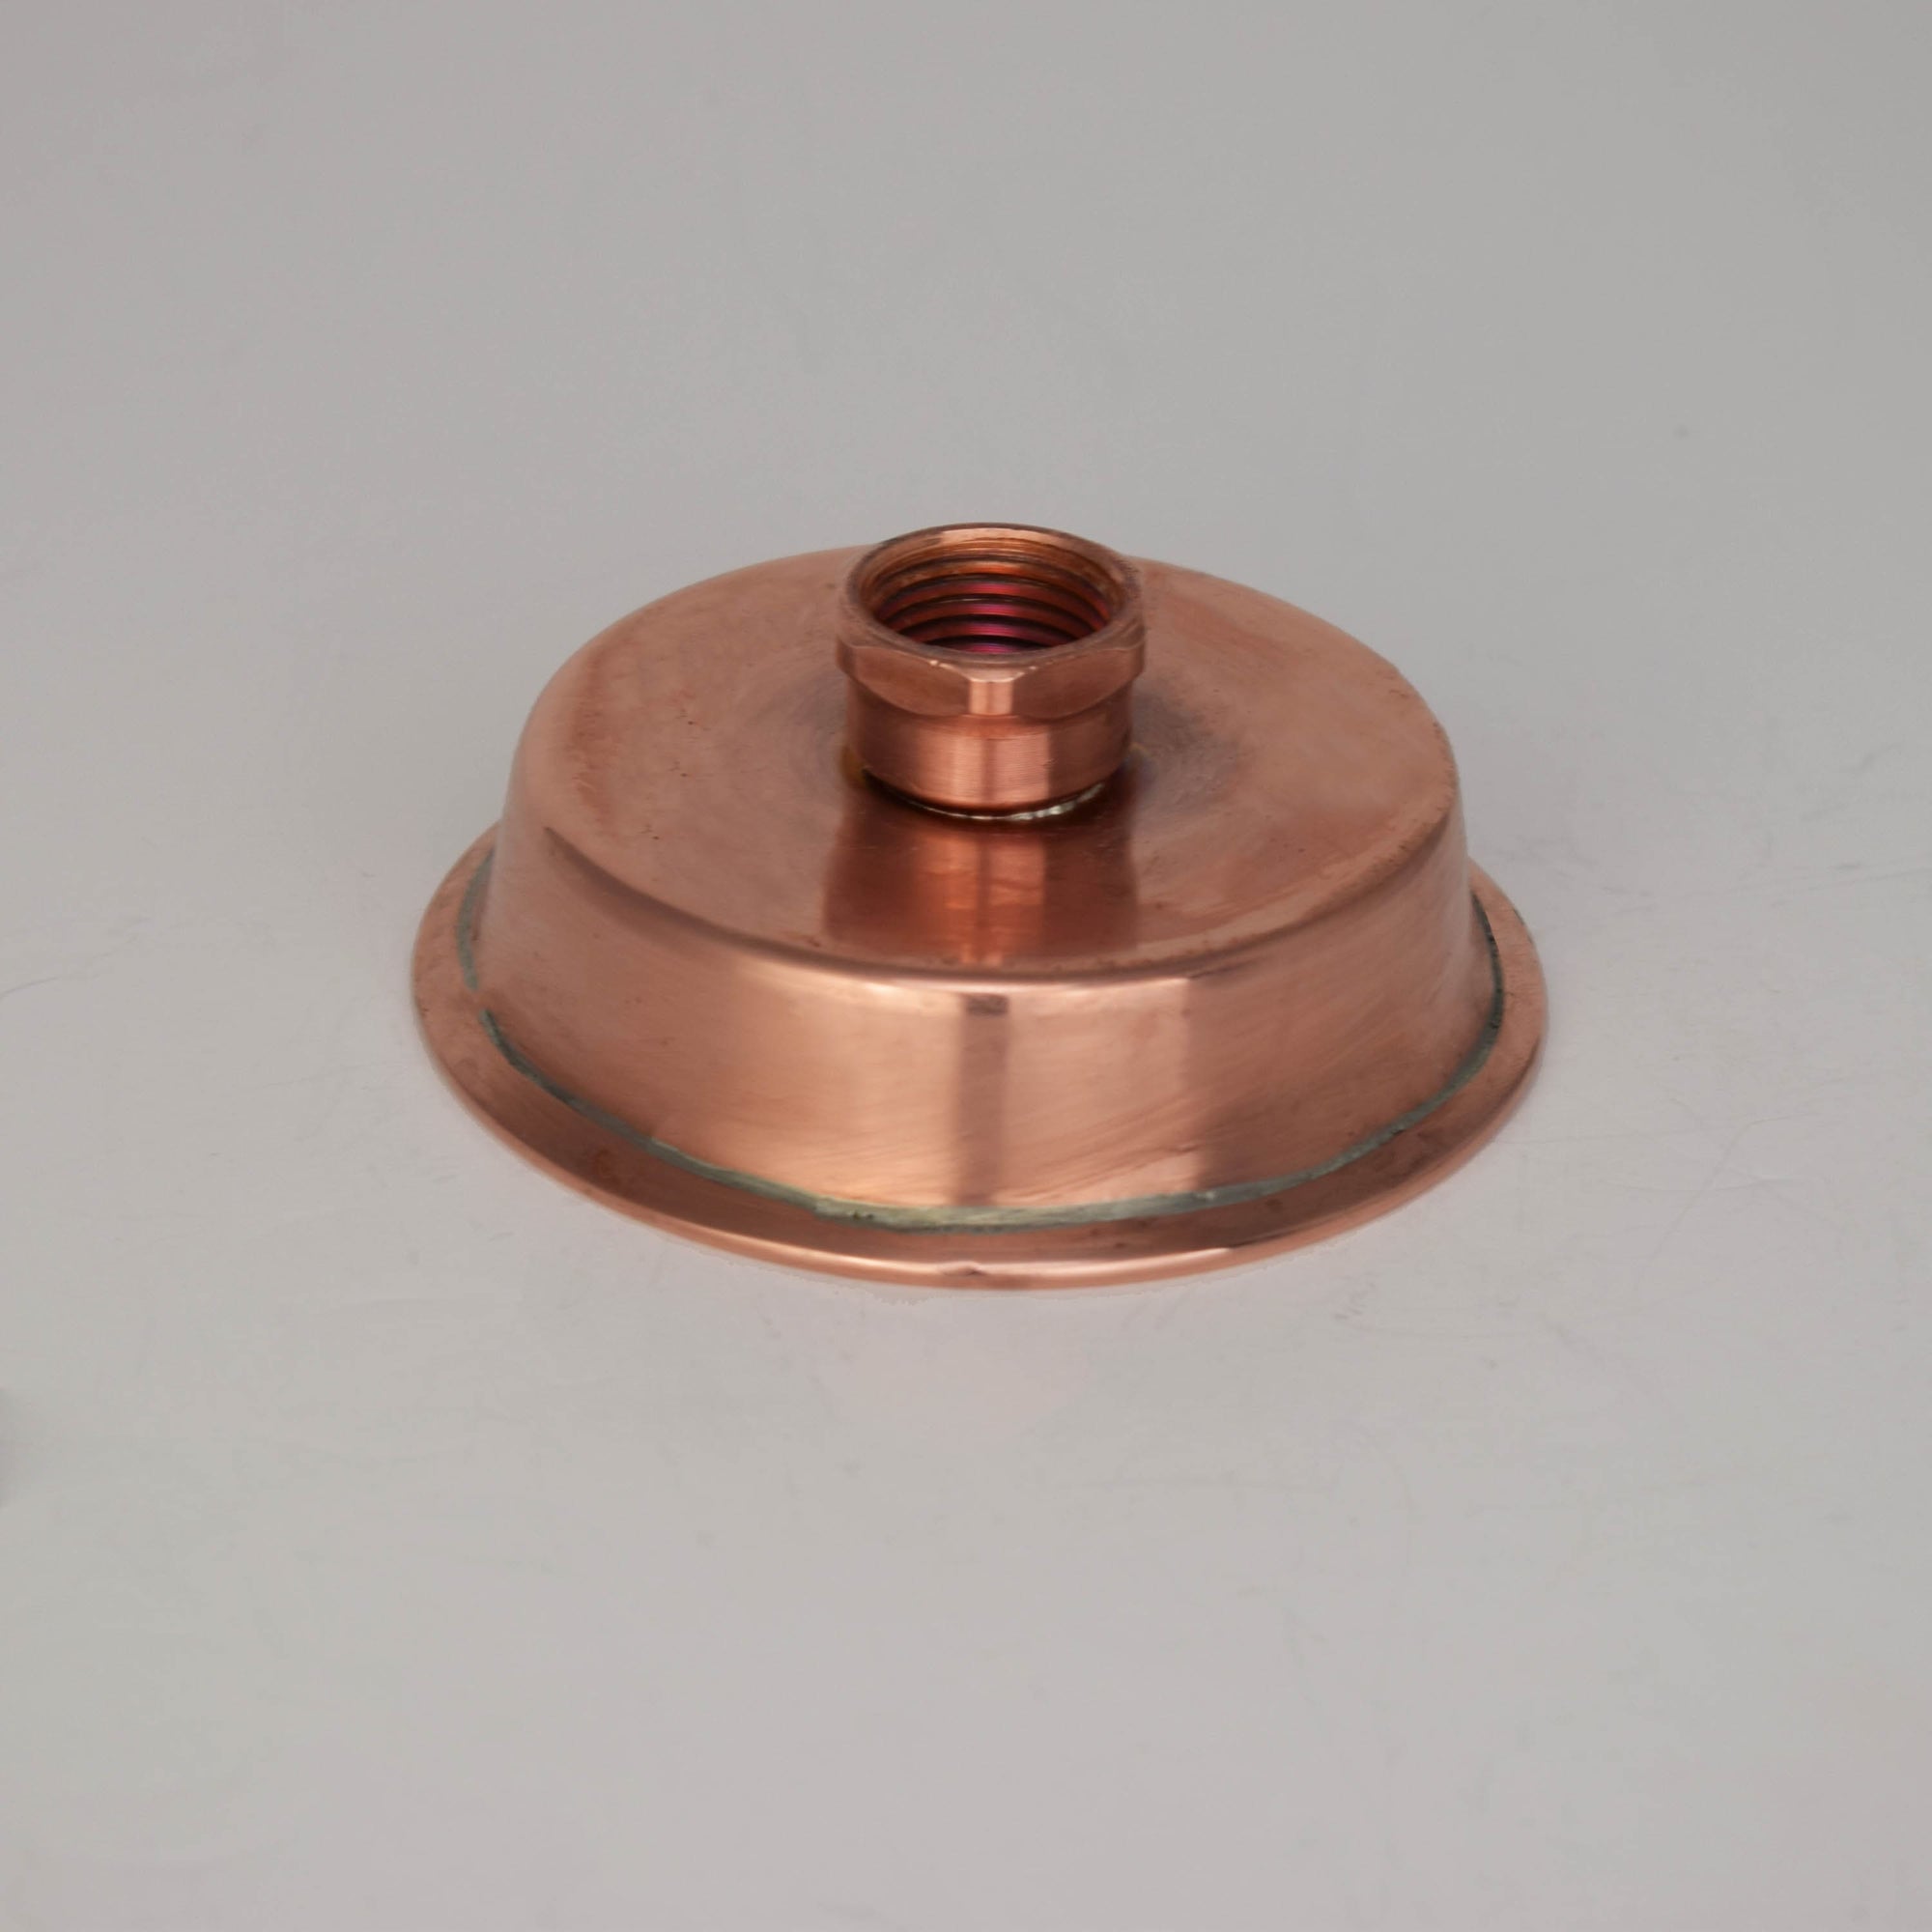 Copper Shower Head - Small Shower Rose - Proper Copper Design flat